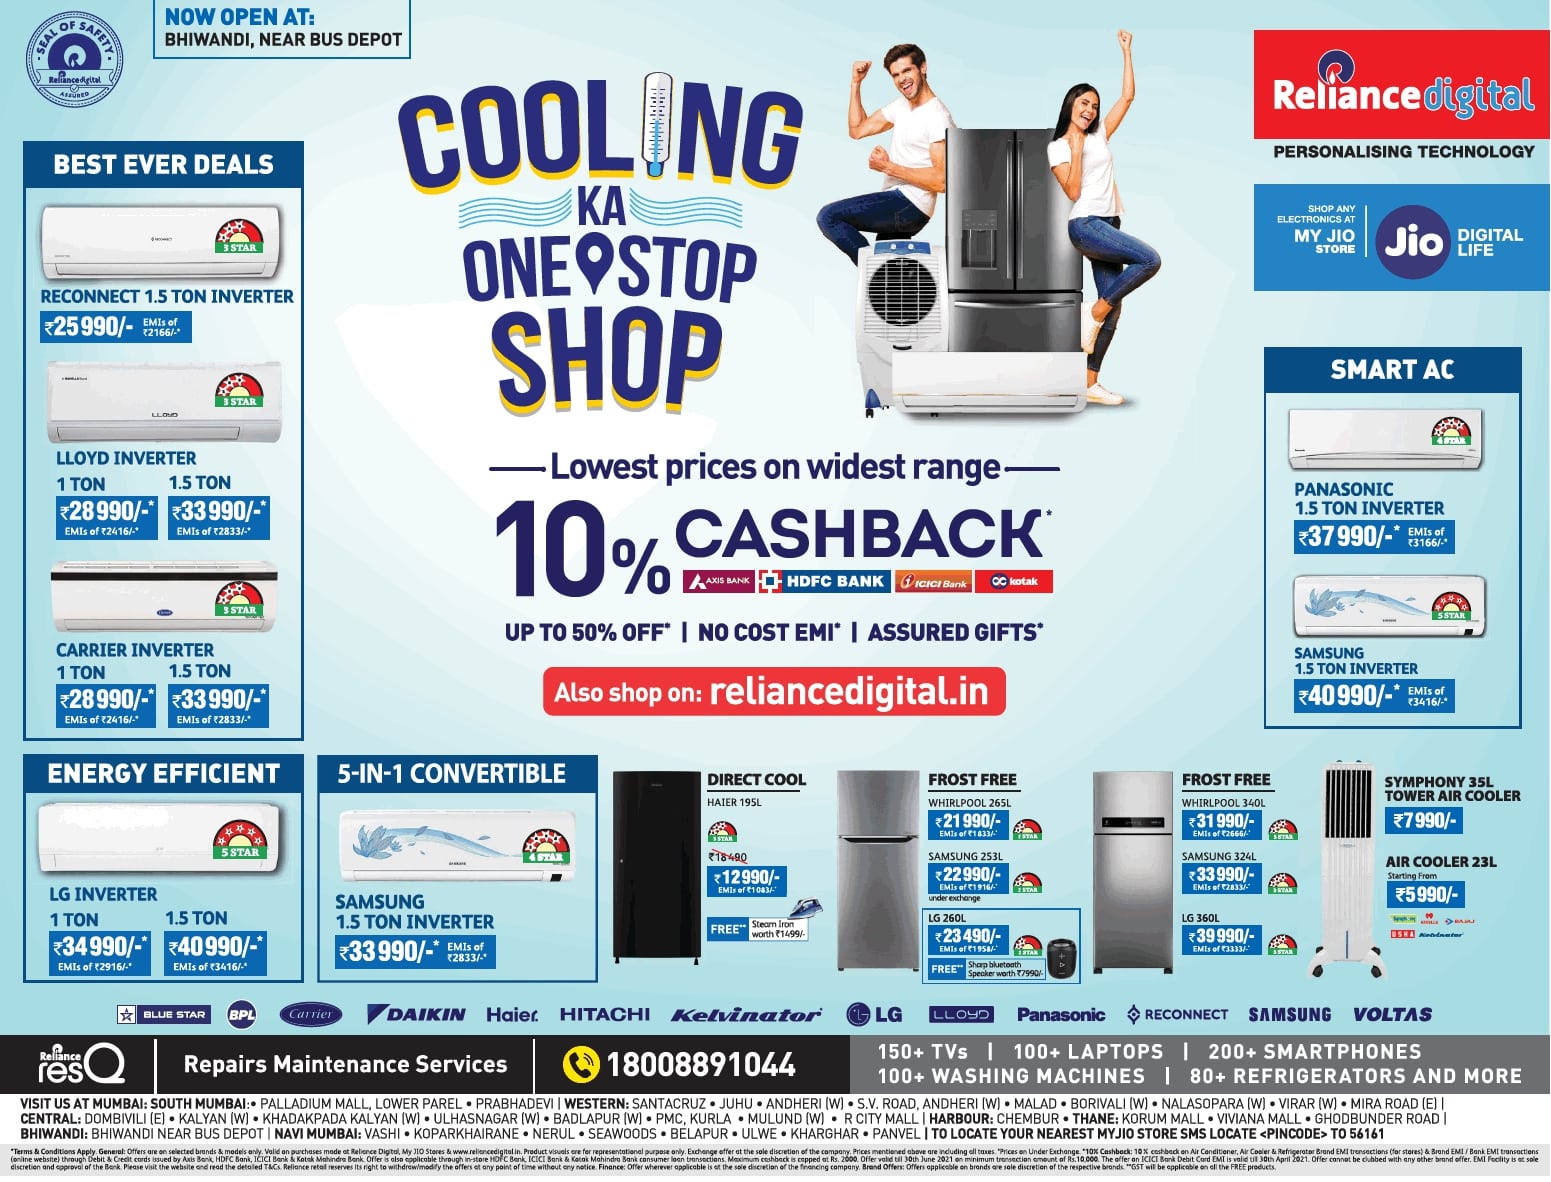 reliance-digital-cooling-ka-one-stop-shop-ad-times-of-india-mumbai-20-03-2021